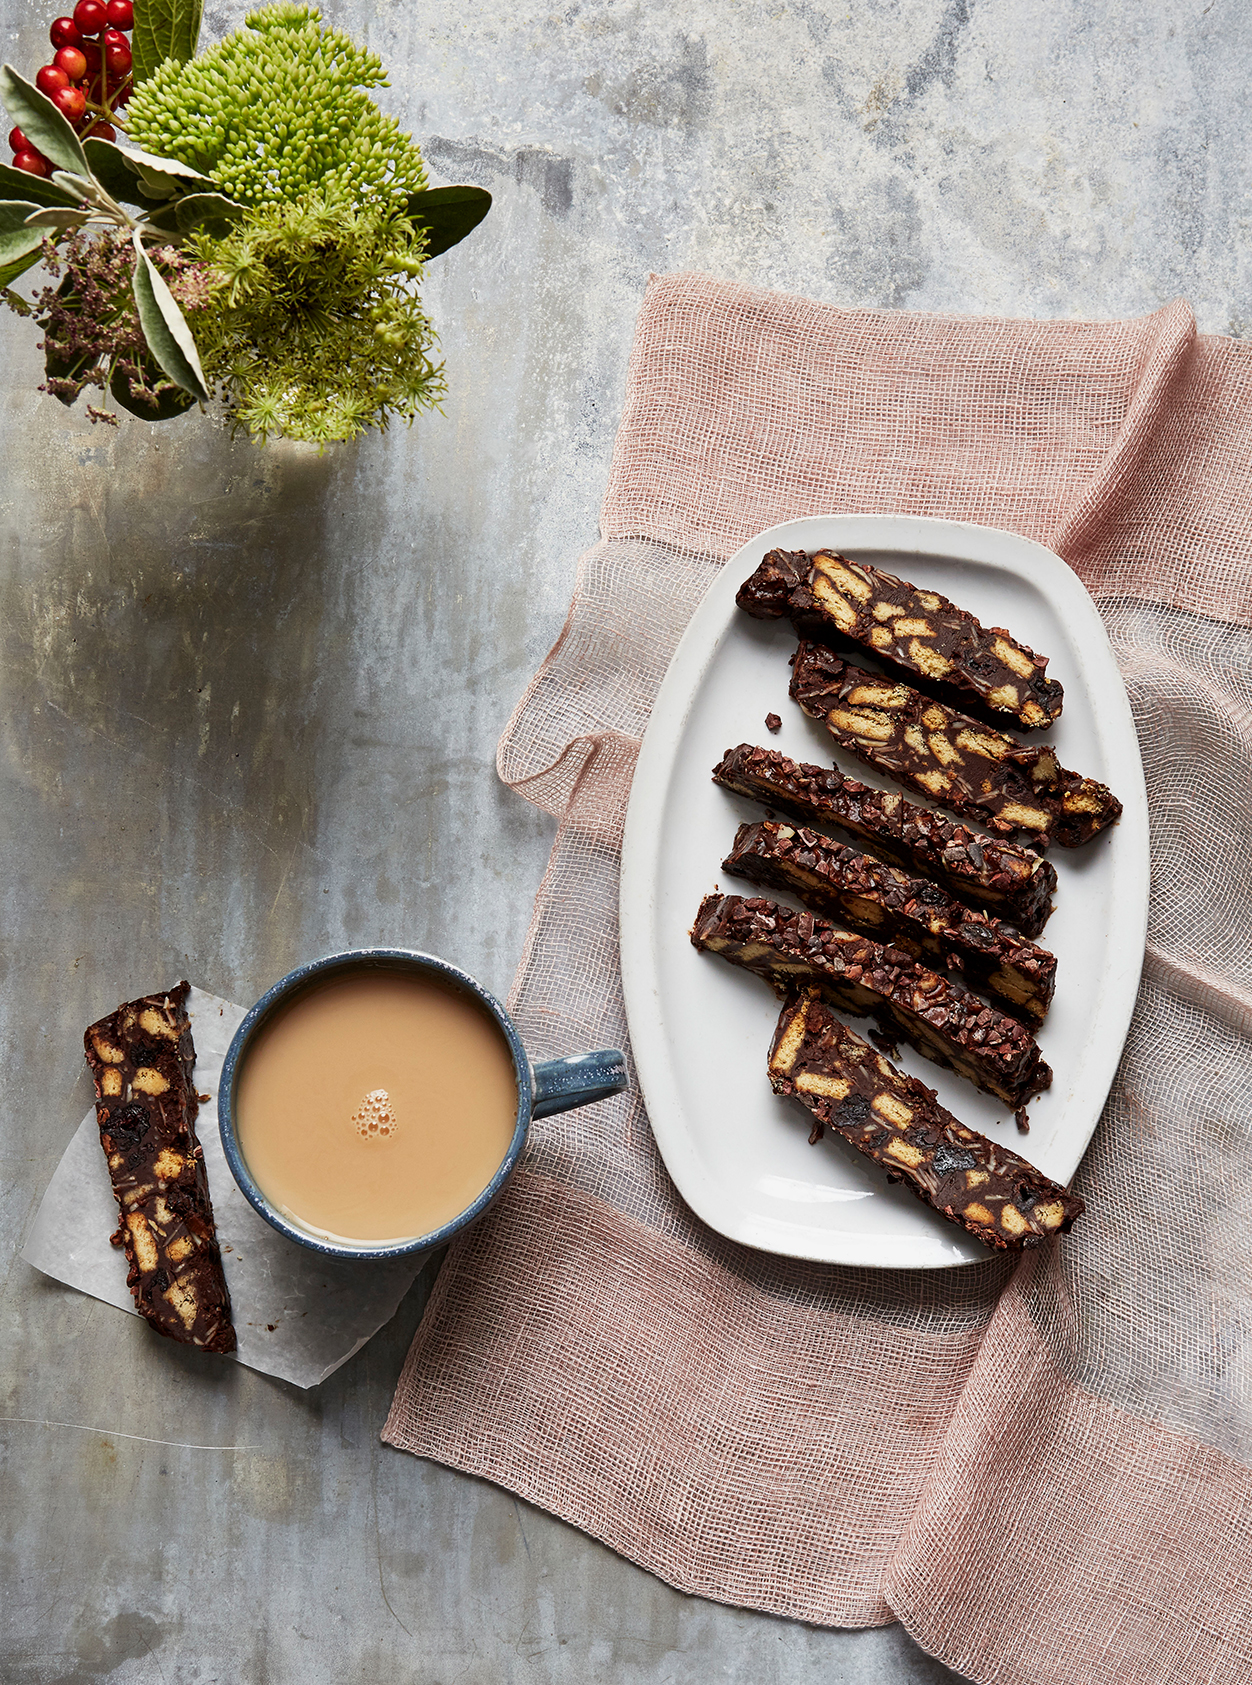 Perfect for autumn, a cherry, almond and dark chocolate tiffin 'fridge cake'.